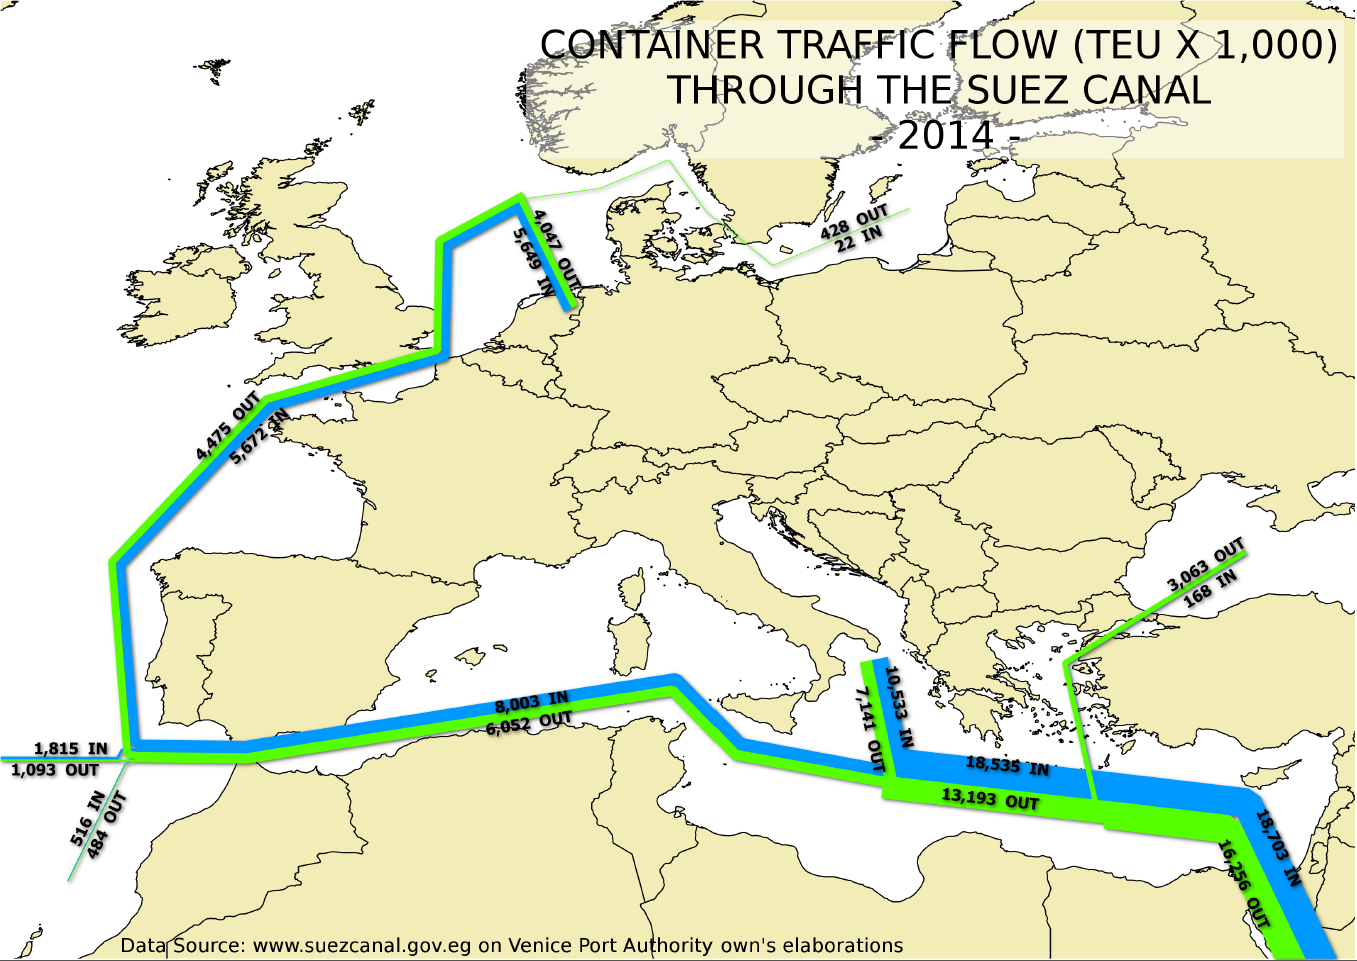 Maritime flows beyond Suez Canal (2014) 2014 CONTAINER TRAFFIC FLOW (TEU X 1000) IN OUT SUEZ 18703 16256 BLACK